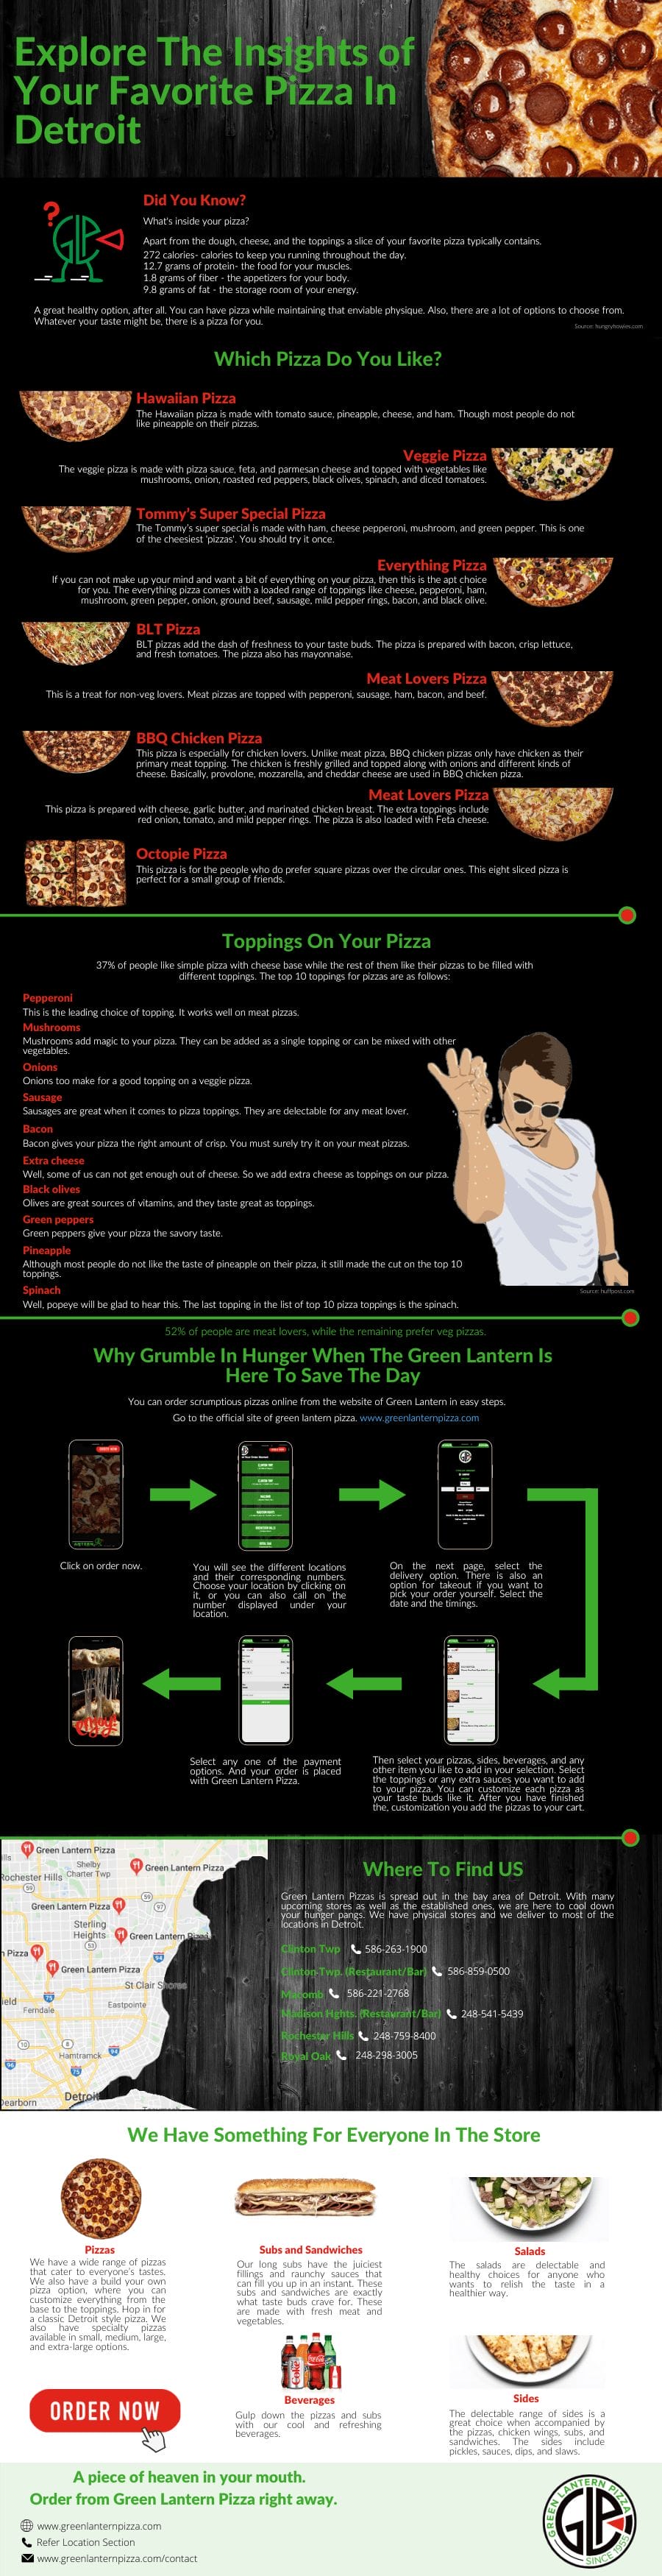 Green-Lantern-Pizza-info-graphic